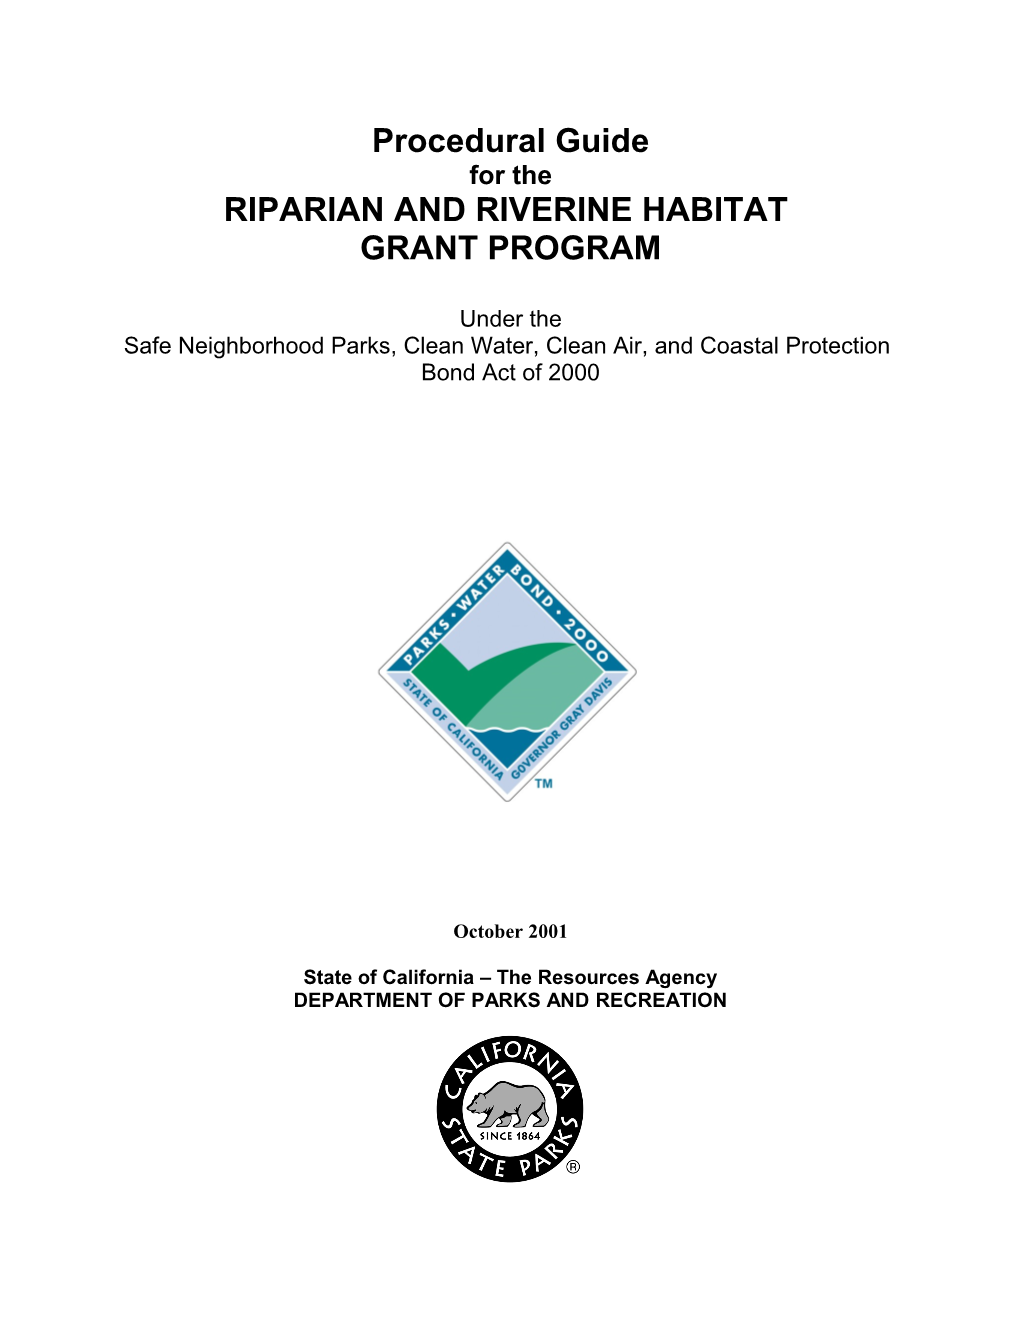 Riparian and Riverine Habitat